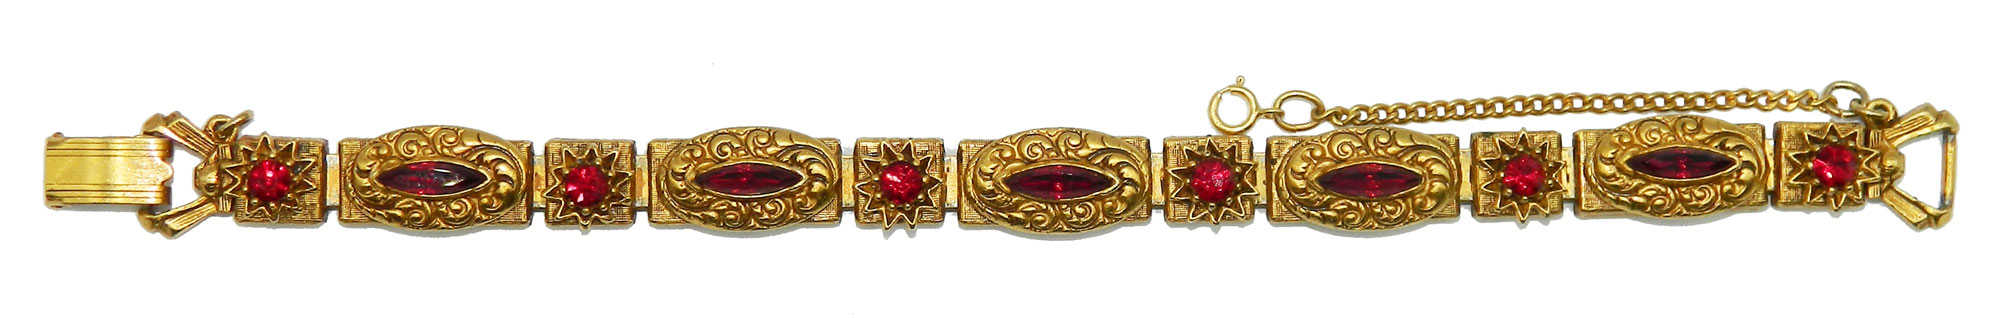 1950s Florenza rhinestone bracelet